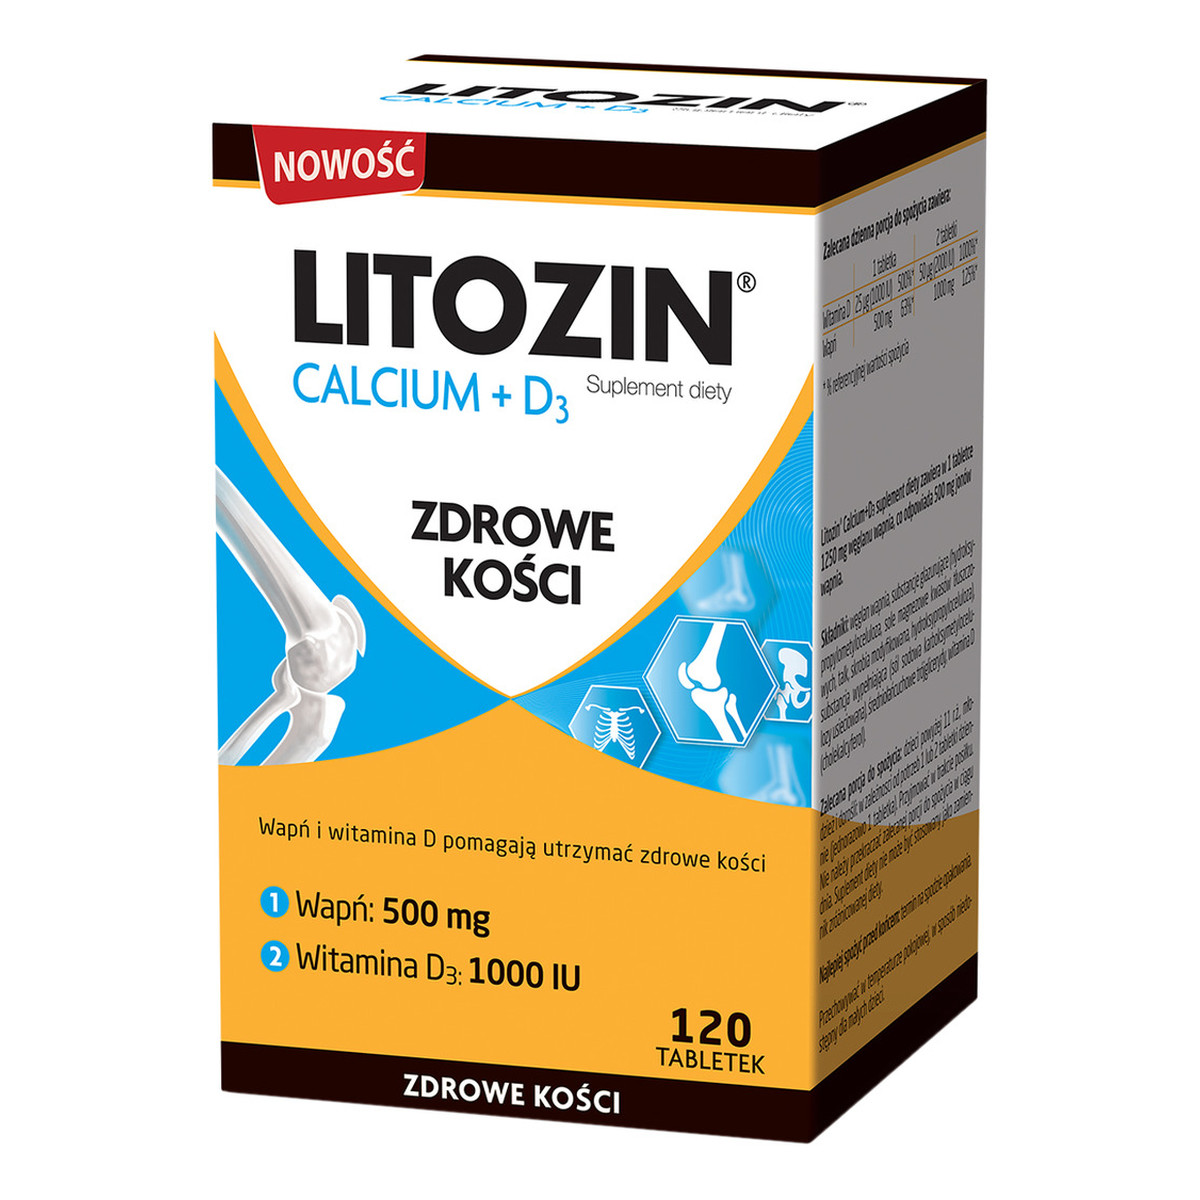 Litozin Calcium + d3 zdrowe kości suplement diety 120 tabletek